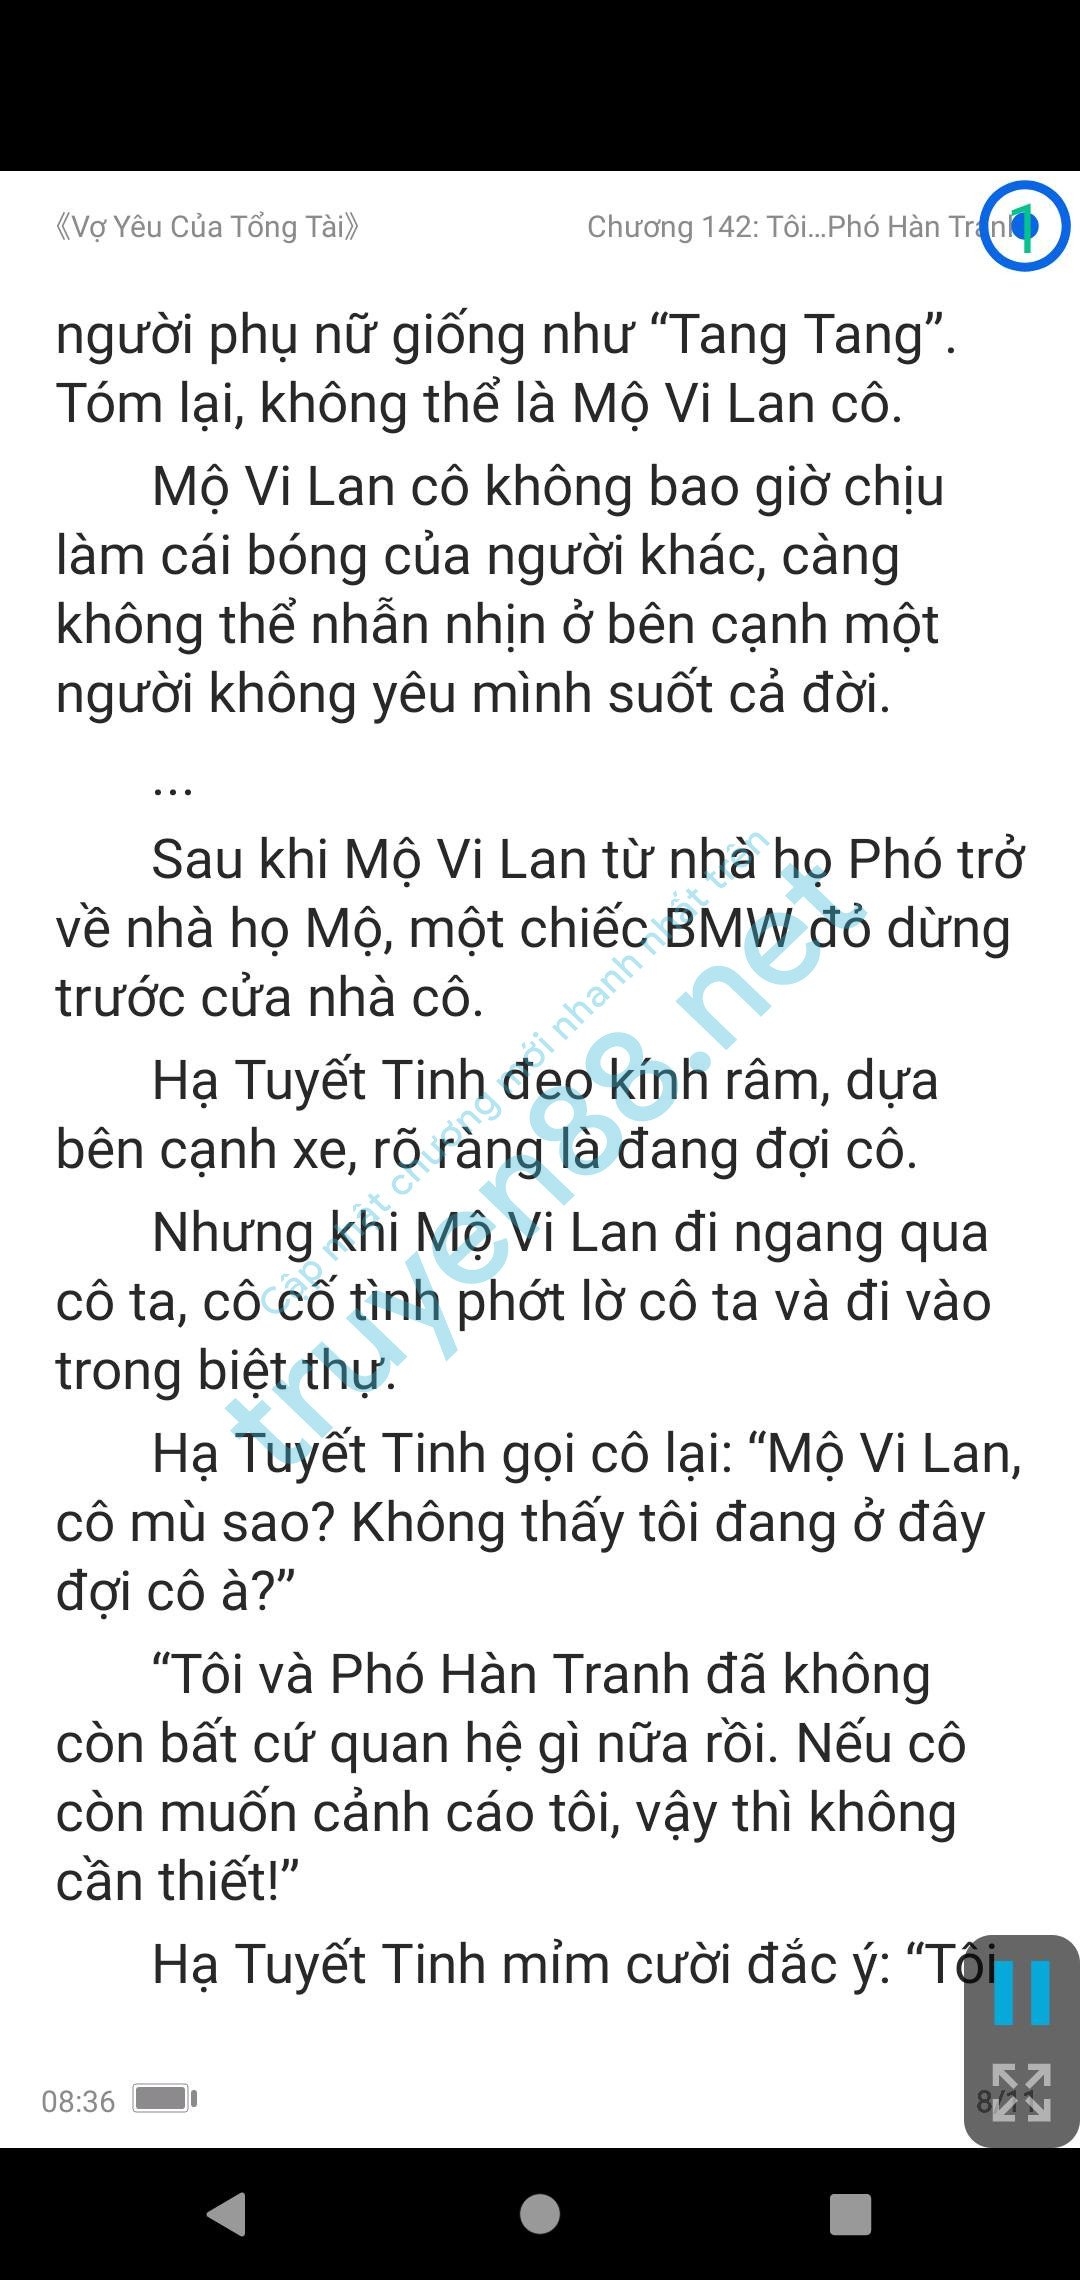 vo-yeu-cua-tong-tai-mo-vi-lan--pho-han-tranh-142-0